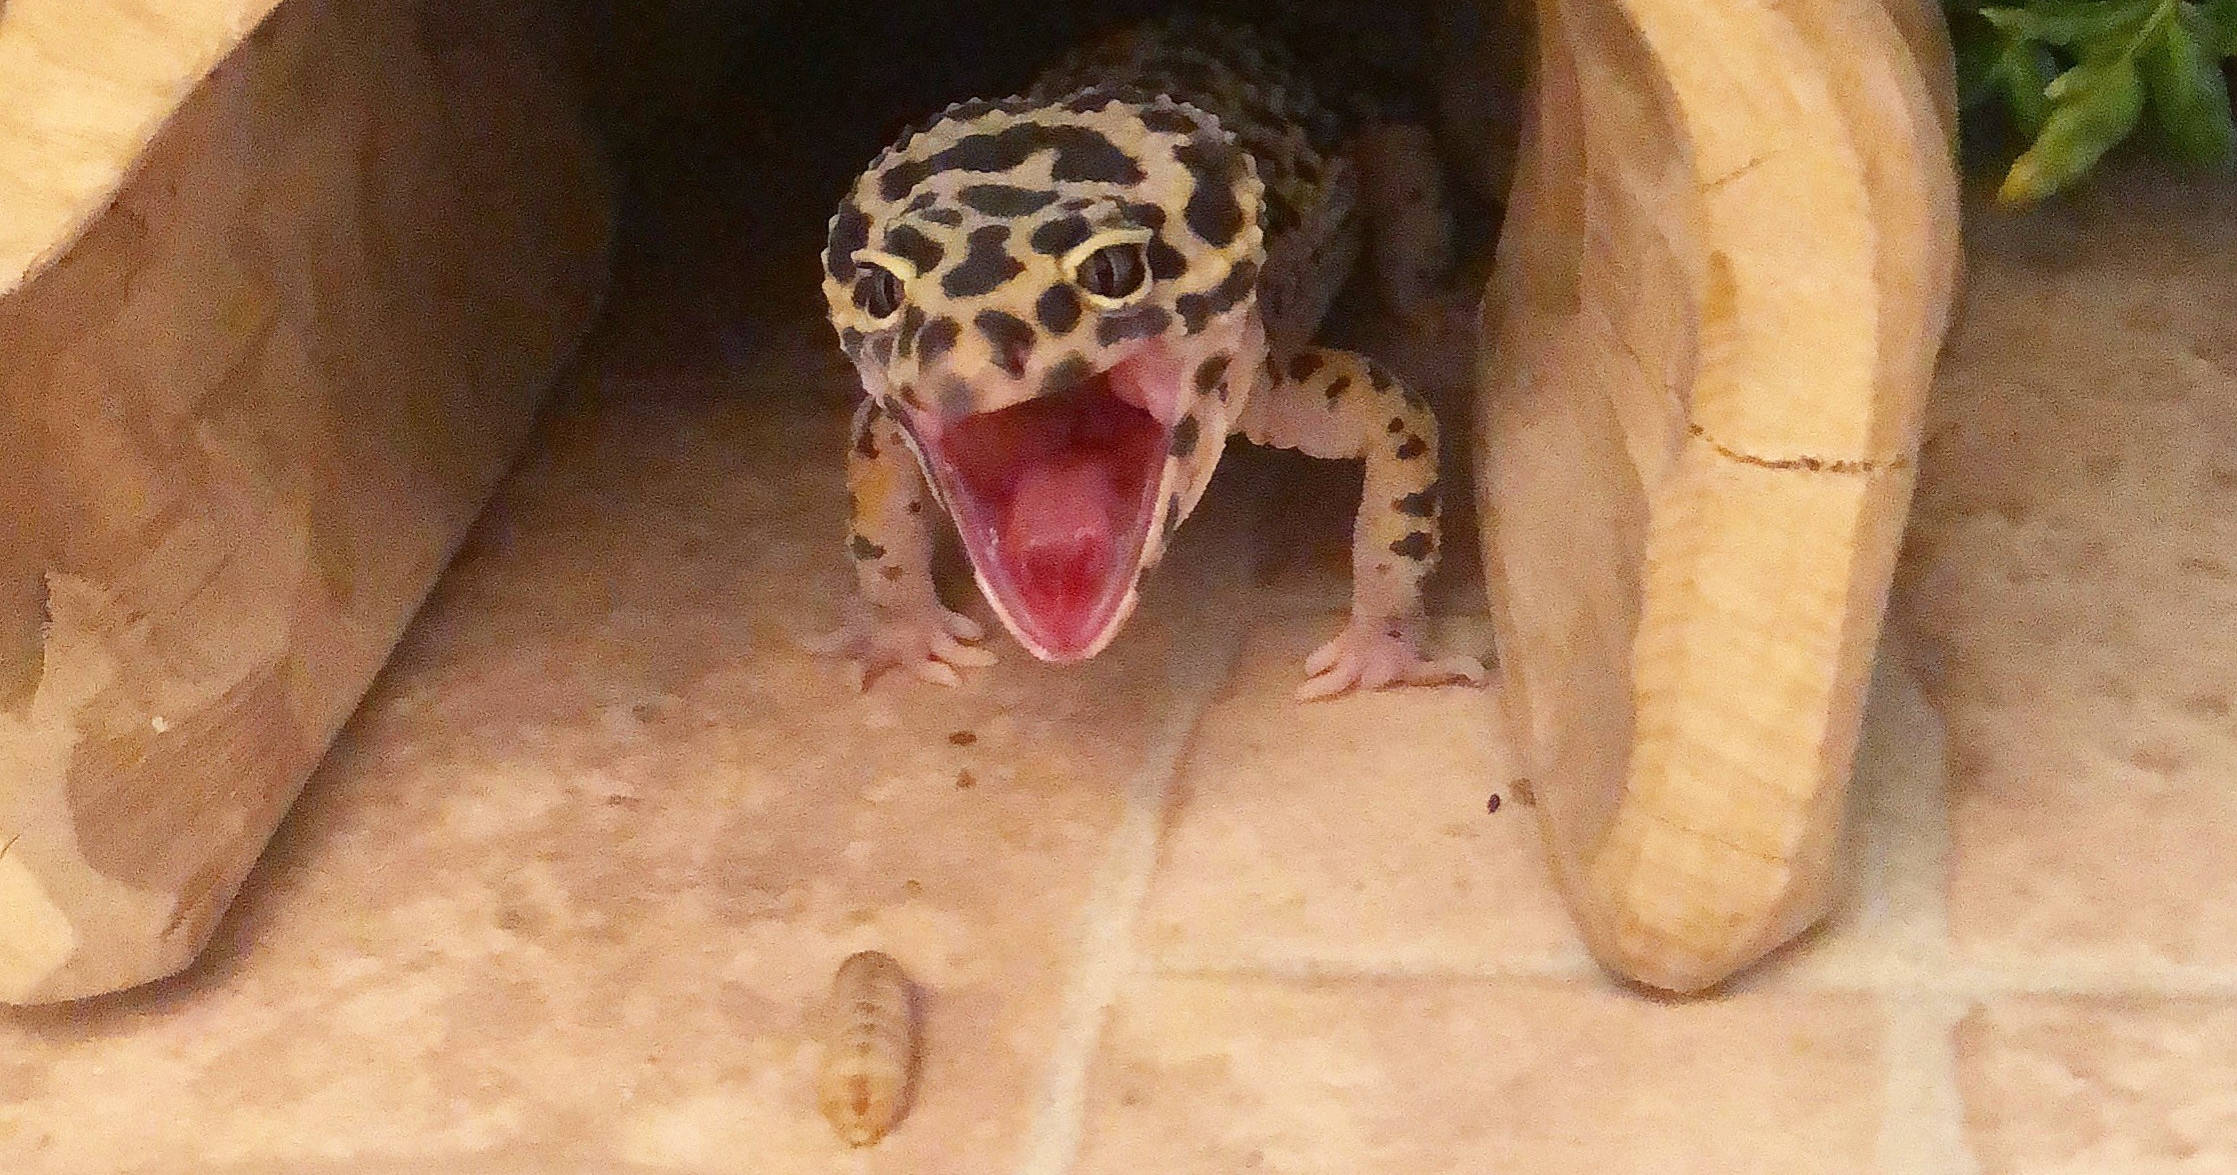 habistat leopard gecko bedding